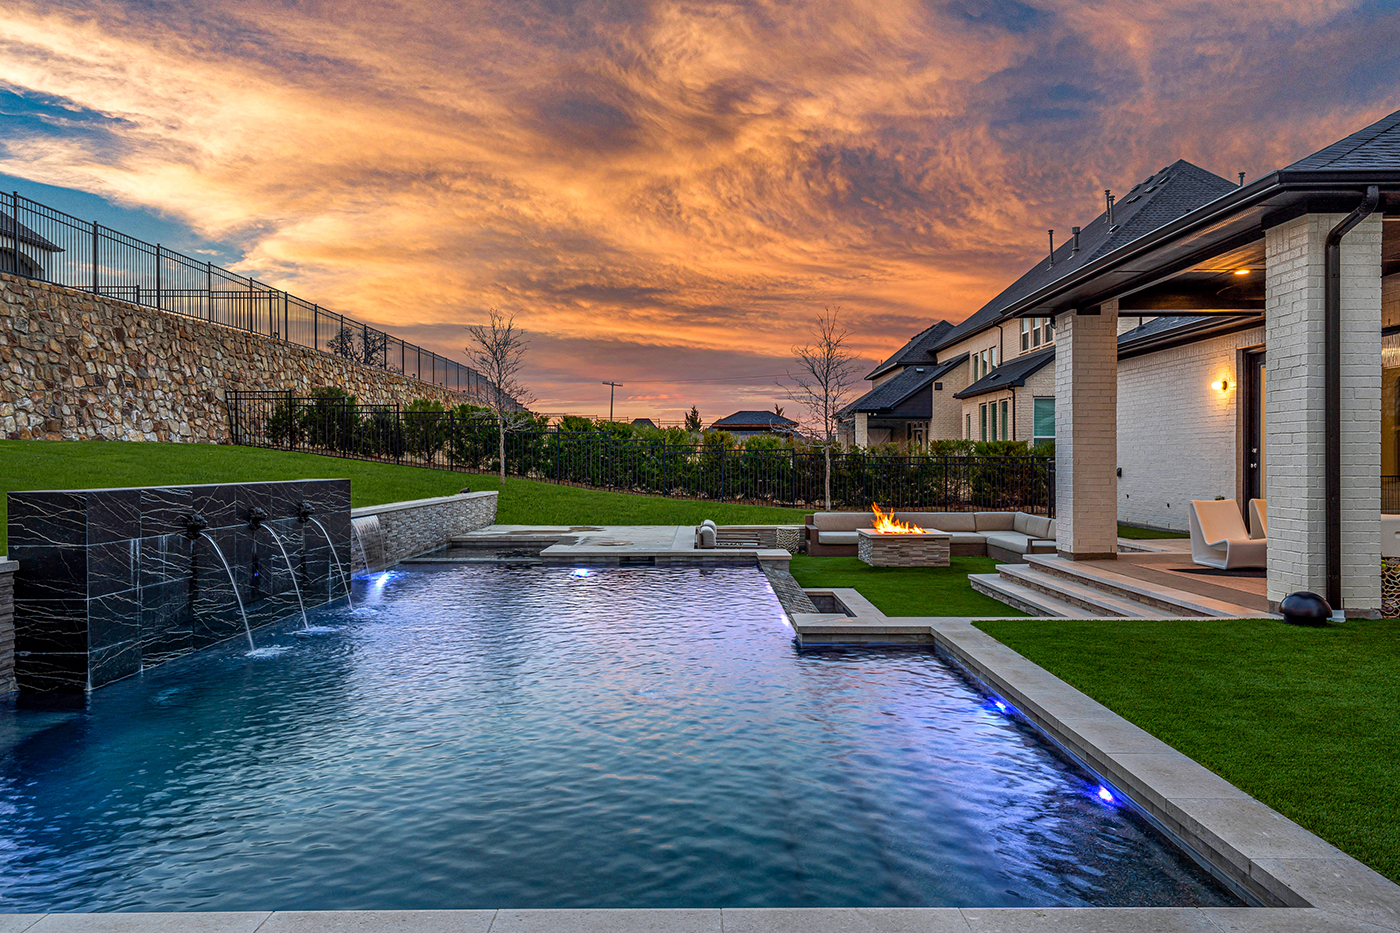 a pool at sunset - dallas pool company